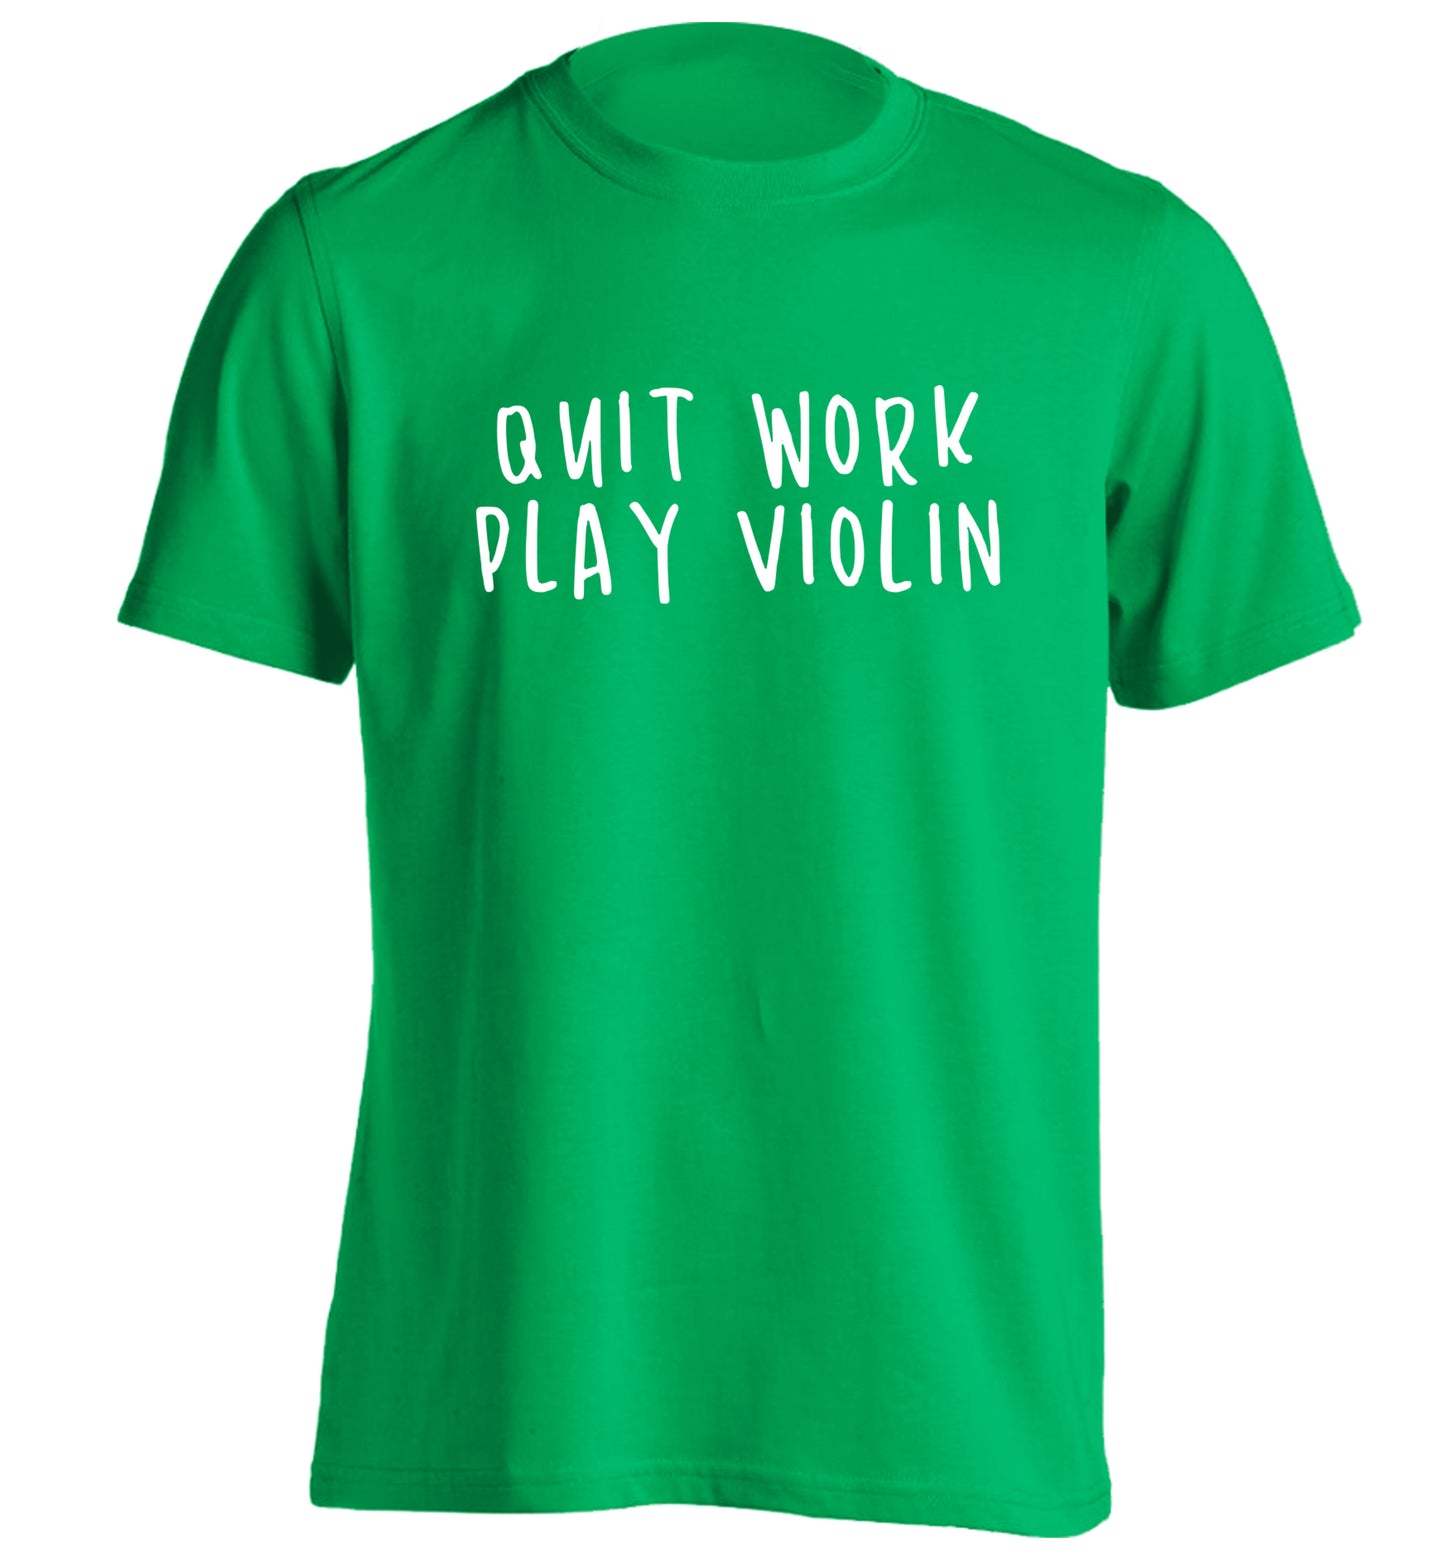 Quit work play violin adults unisex green Tshirt 2XL